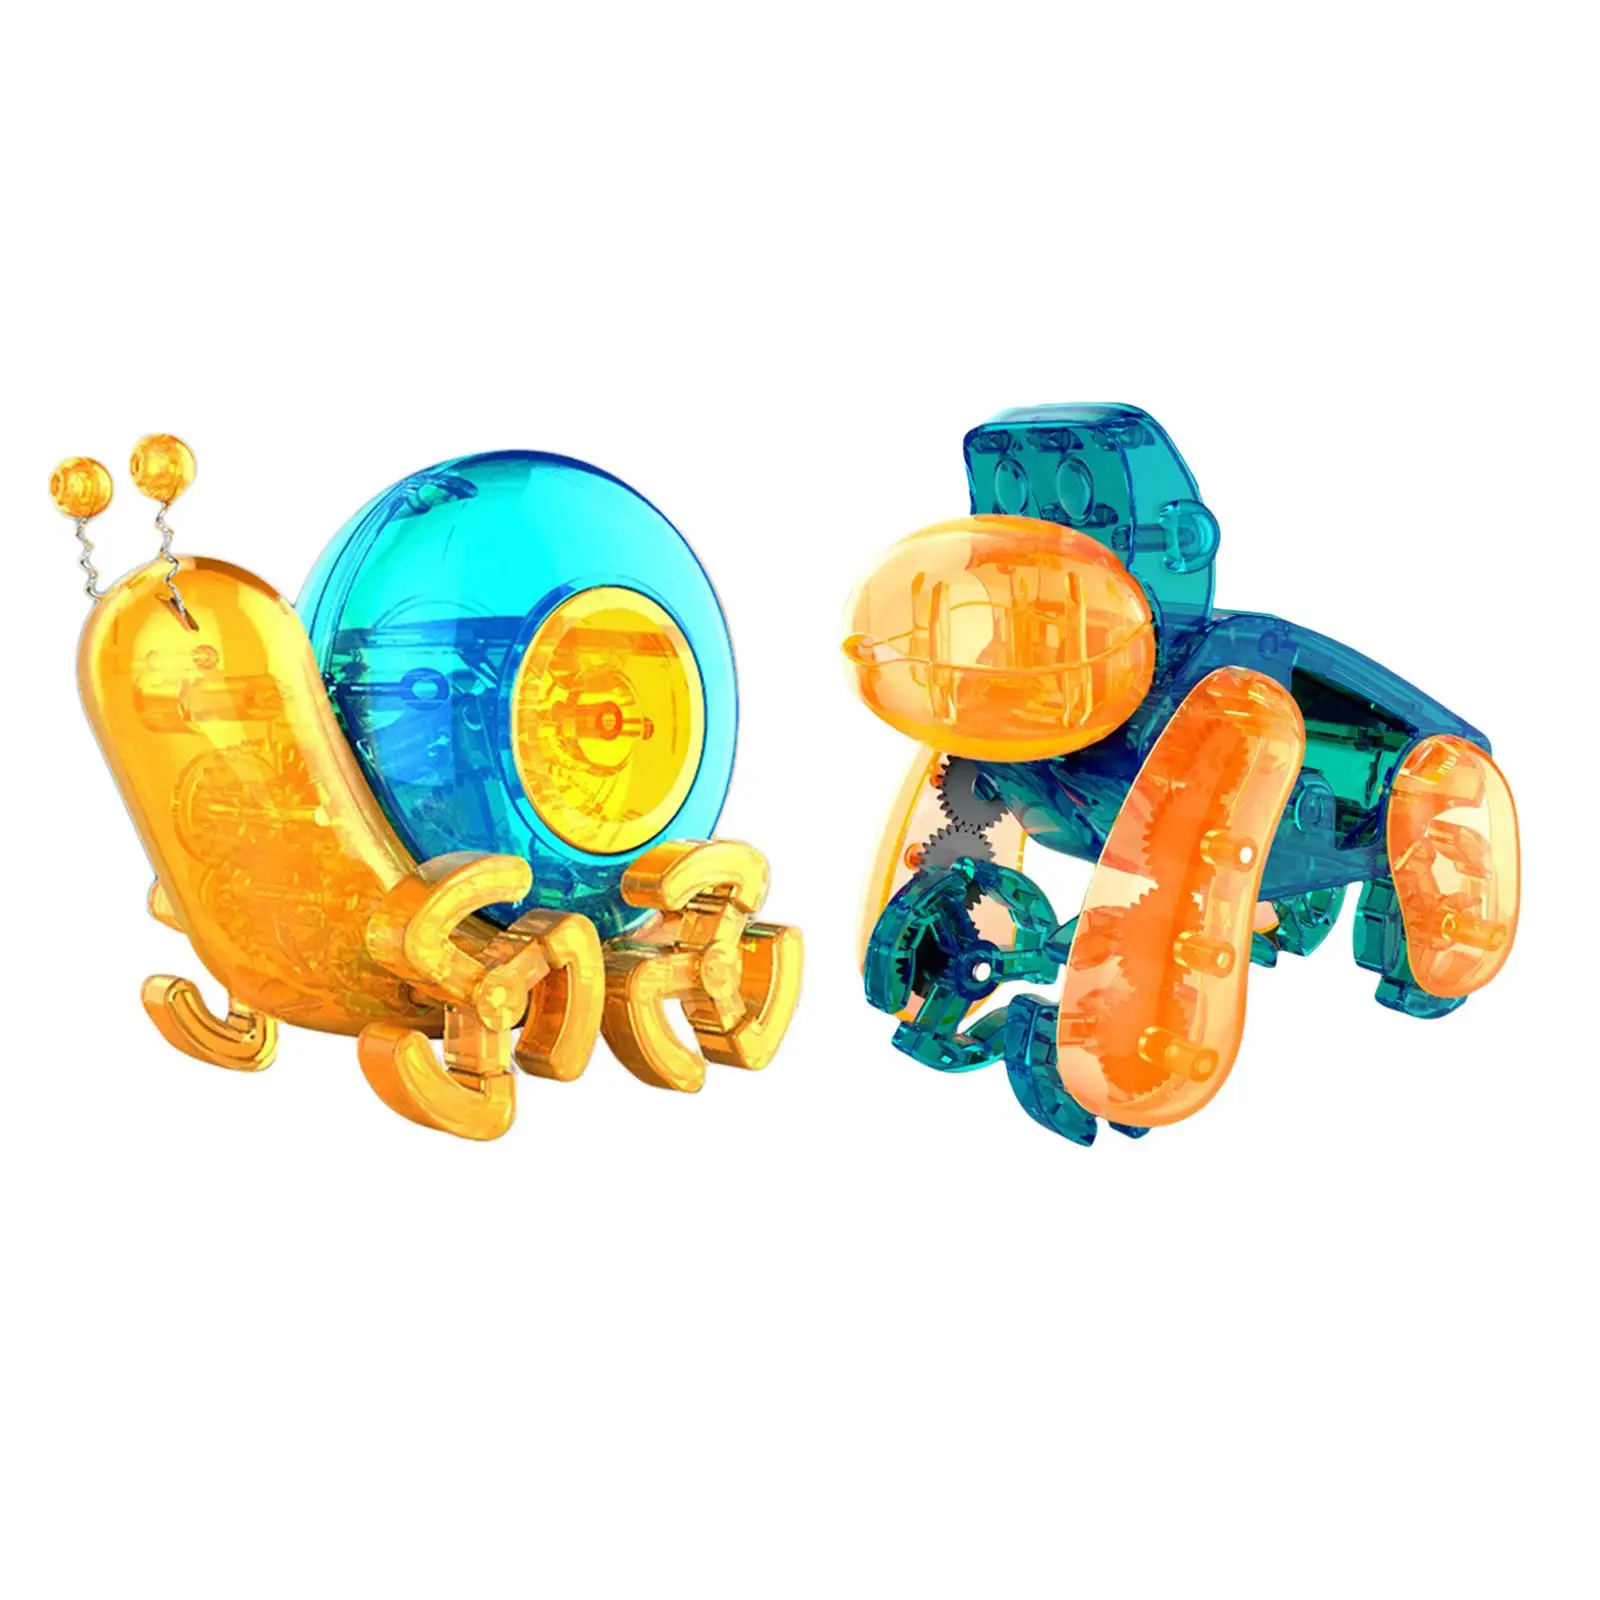  Toys, Gift Scientific Creative Robotic Set for children age 8-12 